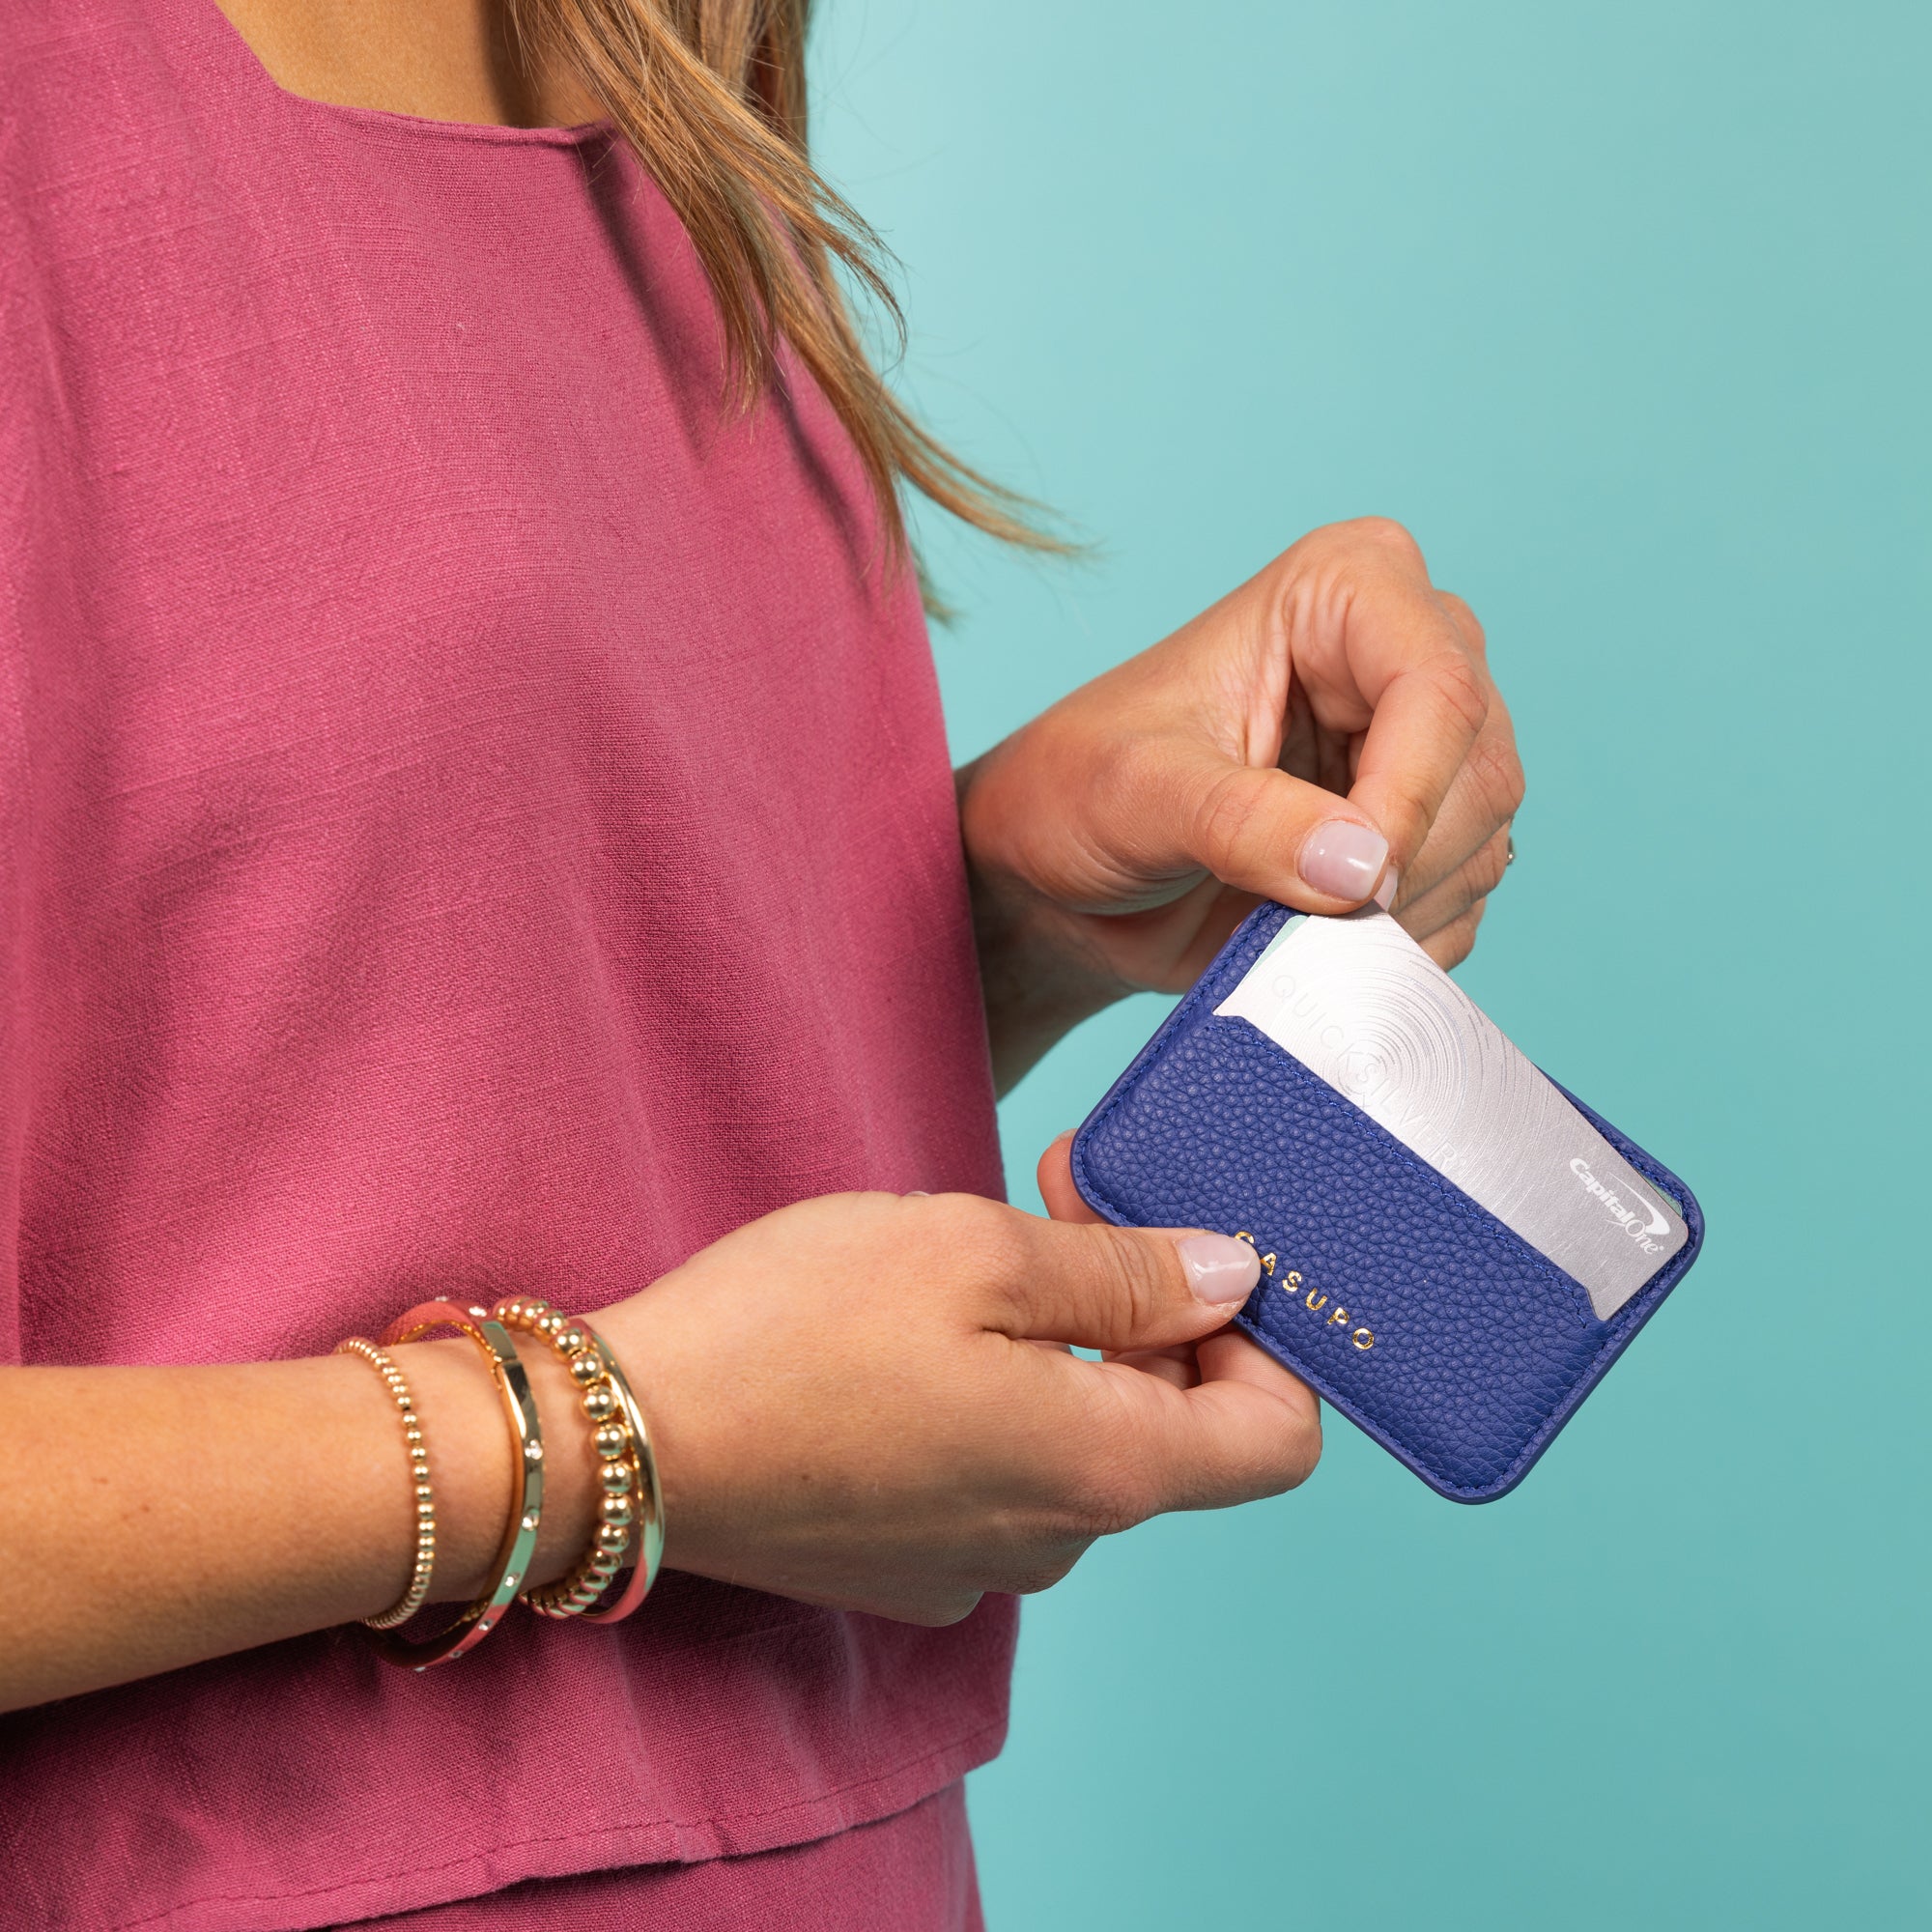 cobalt blue mag safe iPhone wallet for women, minimalist cardholder with magnet for iPhones